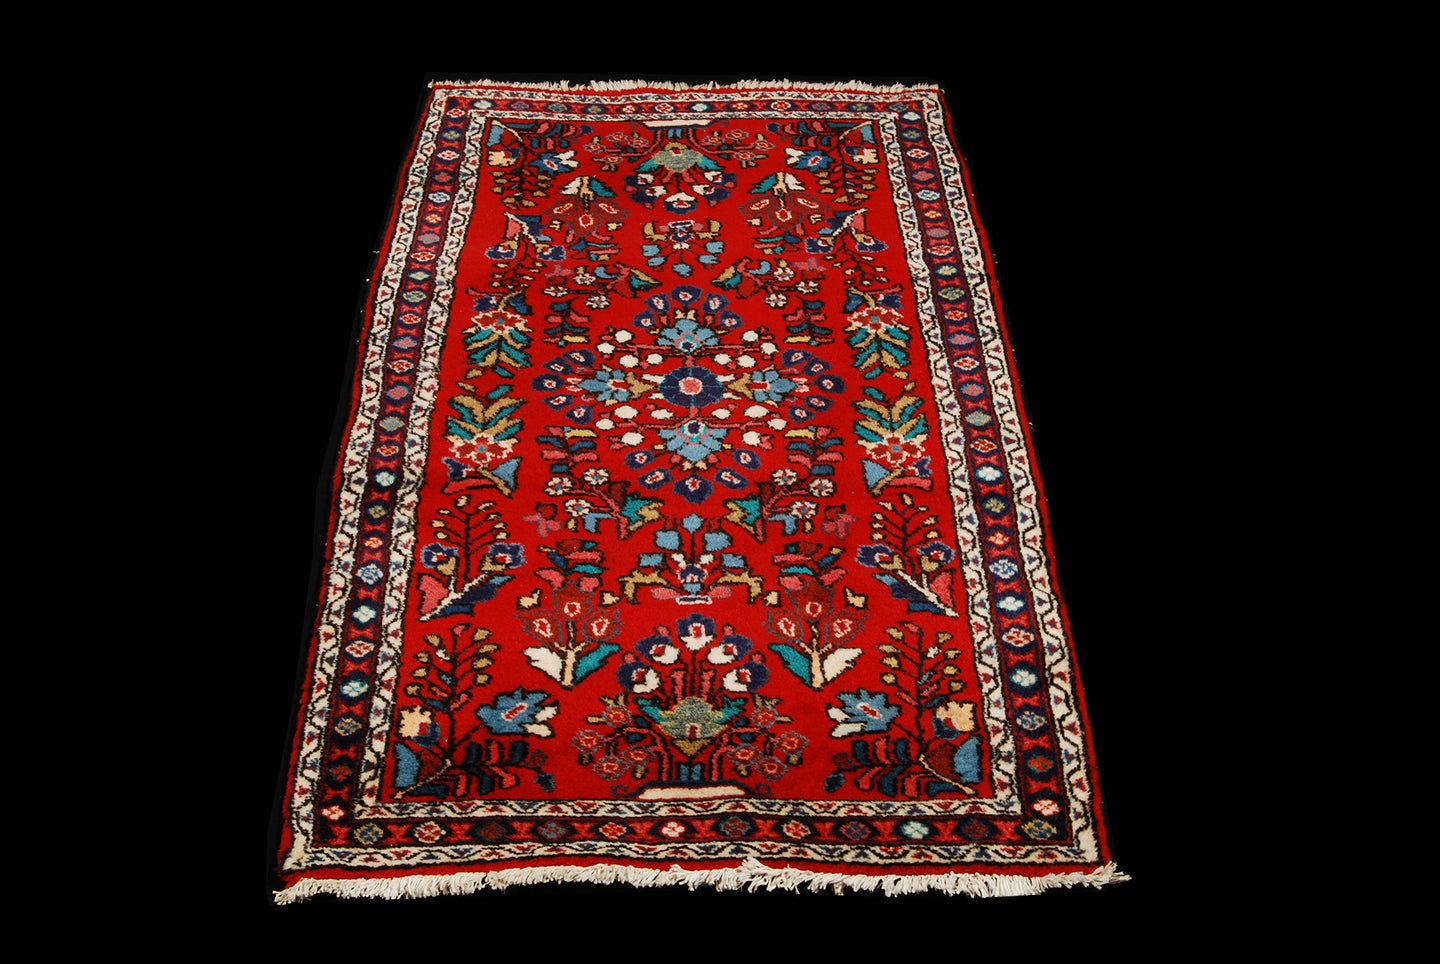 Authentic original hand knotted carpet 125x67 CM